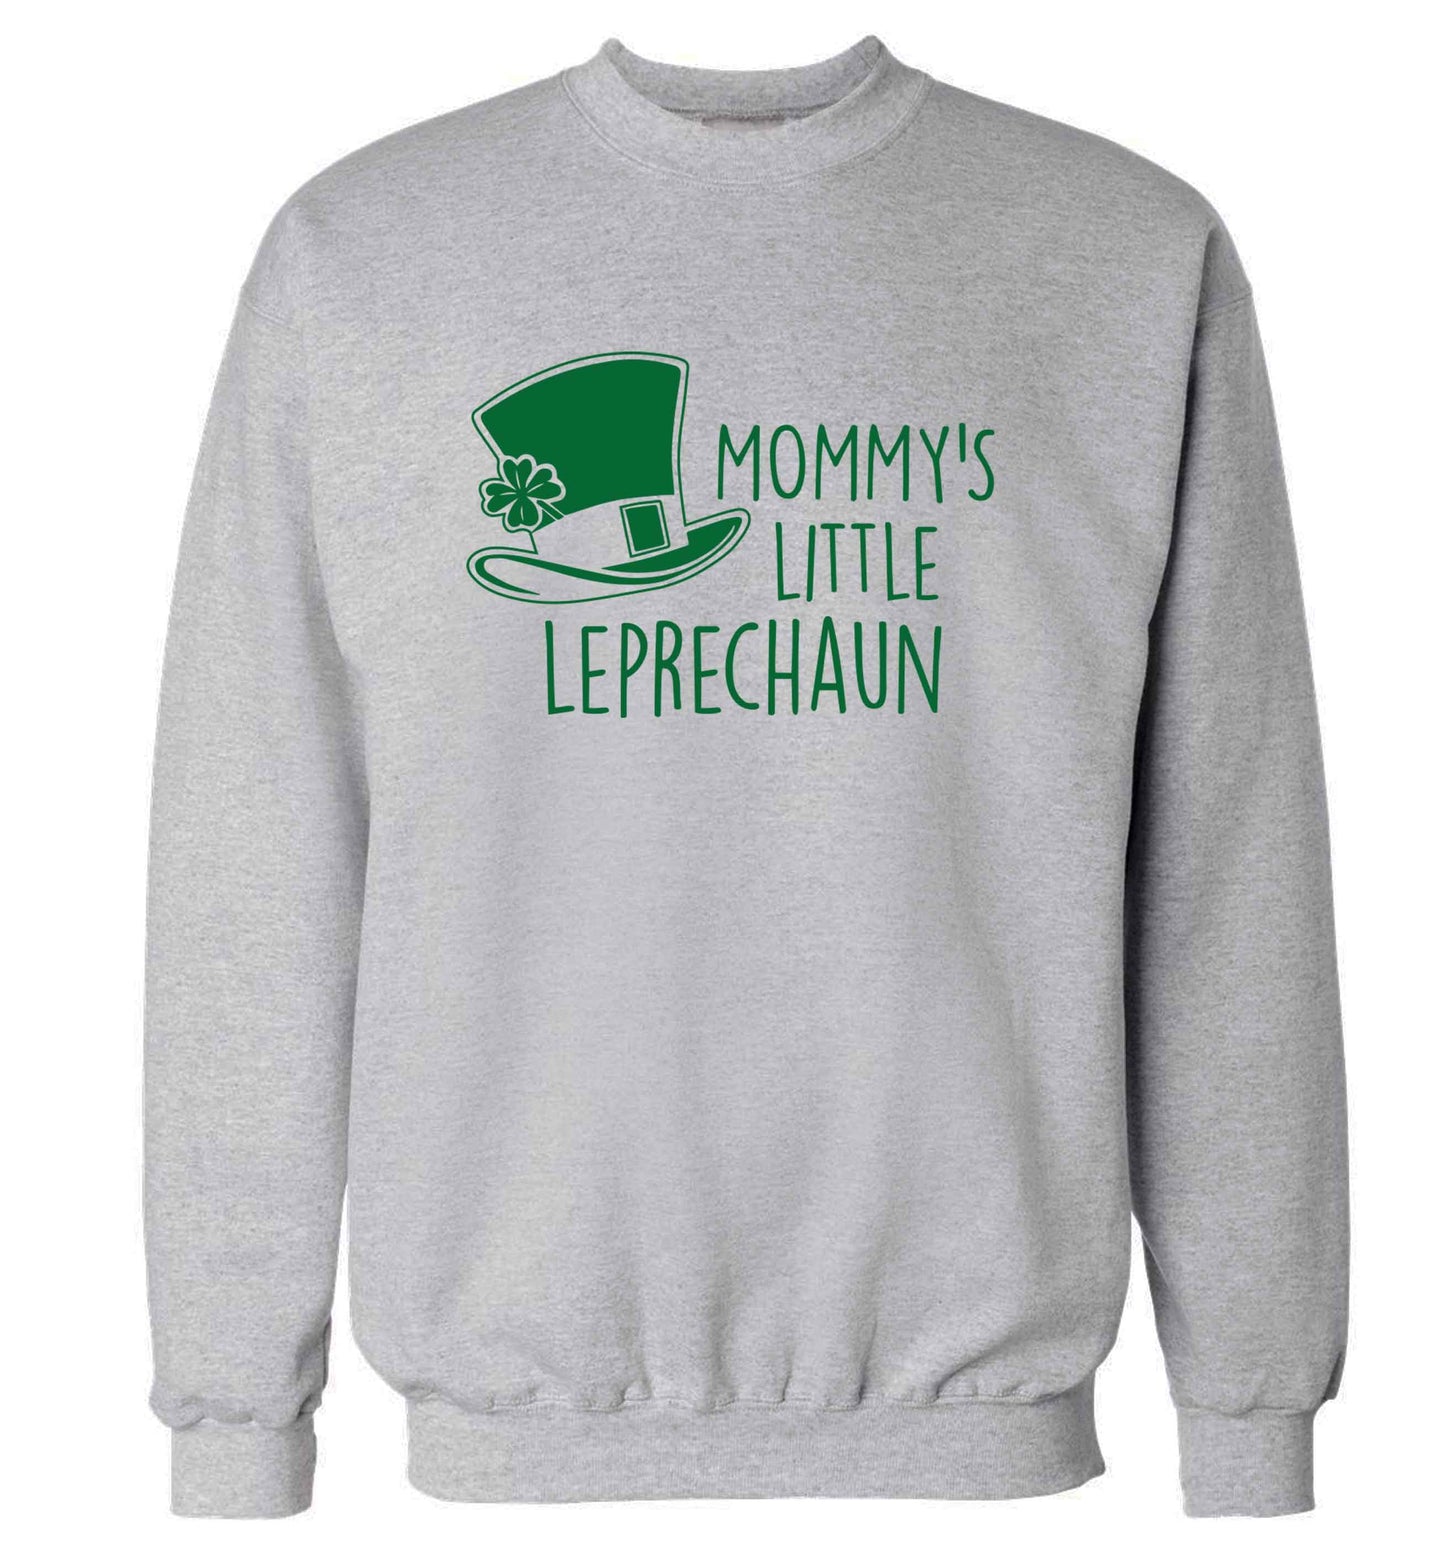 Mommy's little leprechaun adult's unisex grey sweater 2XL